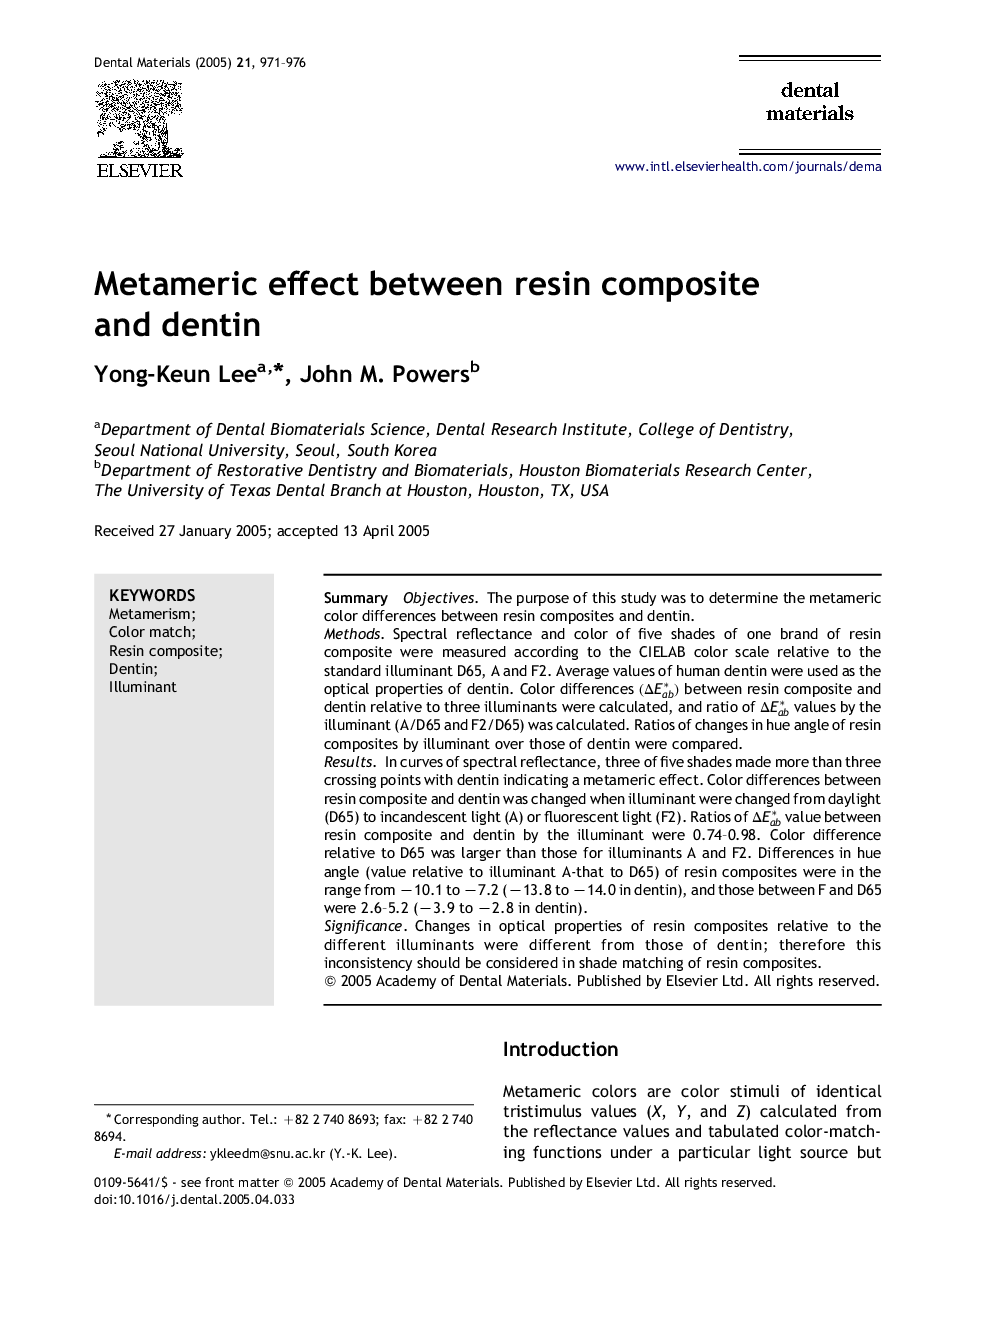 Metameric effect between resin composite and dentin